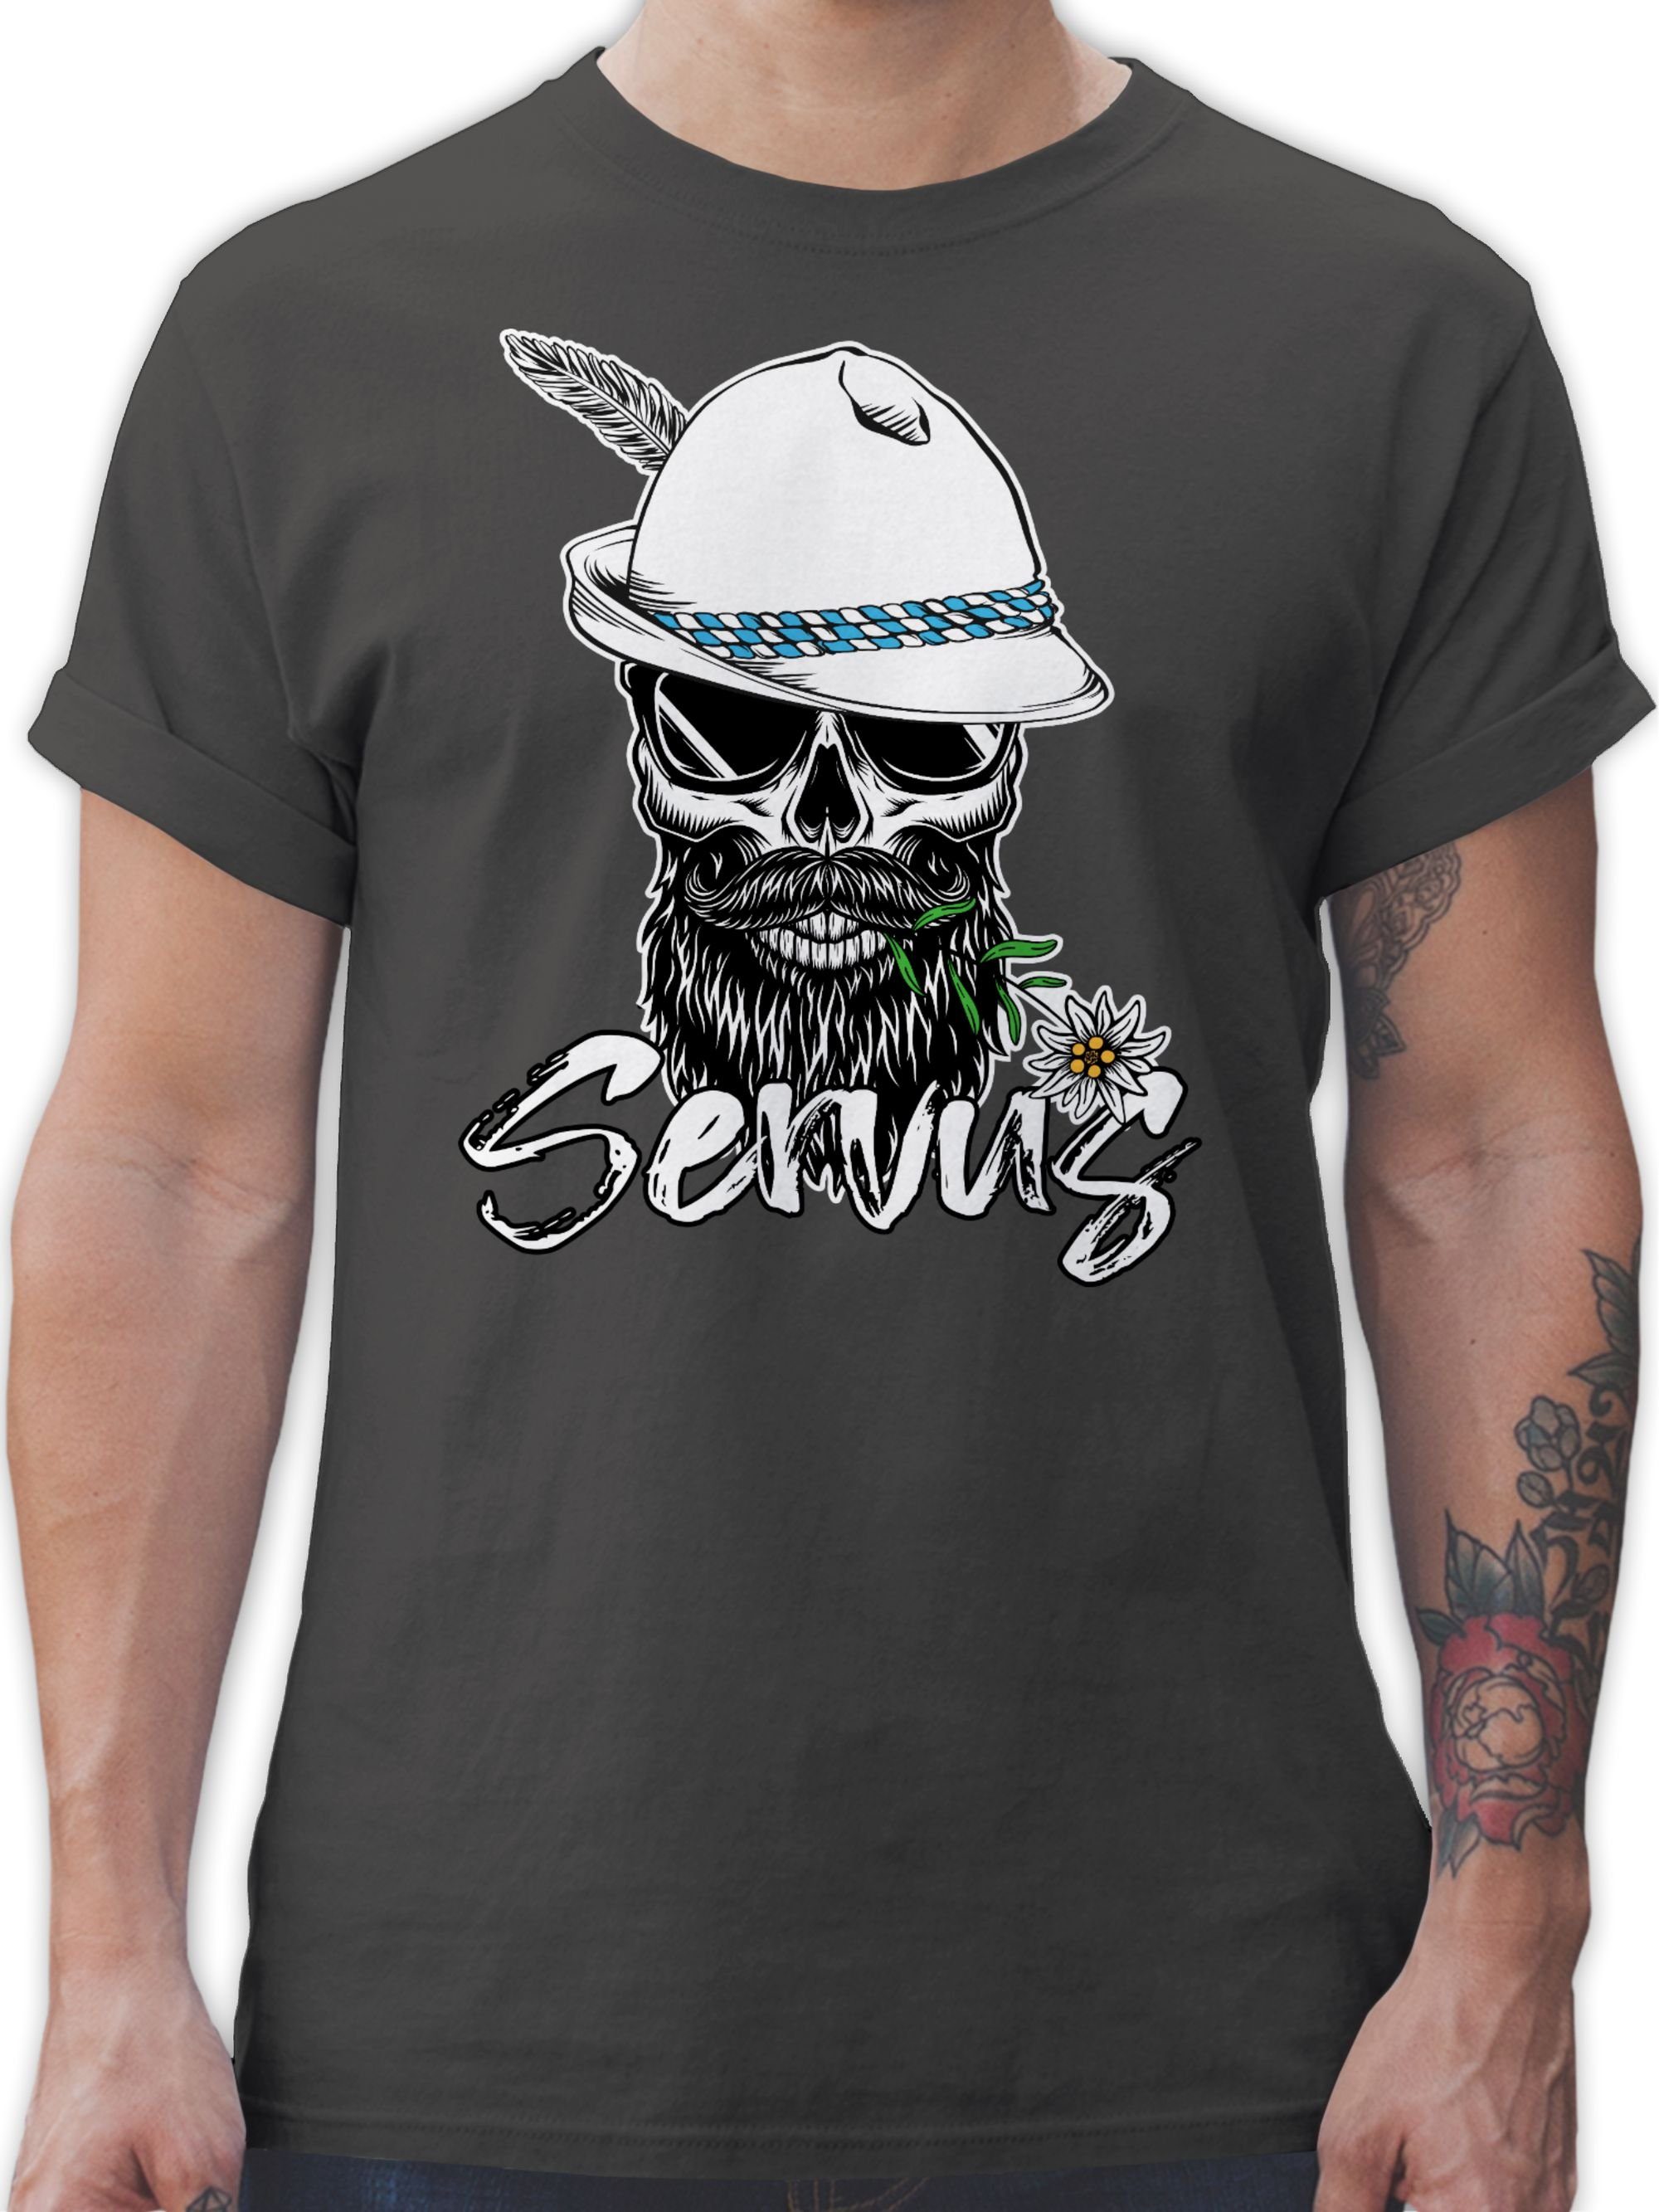 Shirtracer T-Shirt Servus Totenkopf Skull Bayrisch Mode für Oktoberfest Herren 01 Dunkelgrau